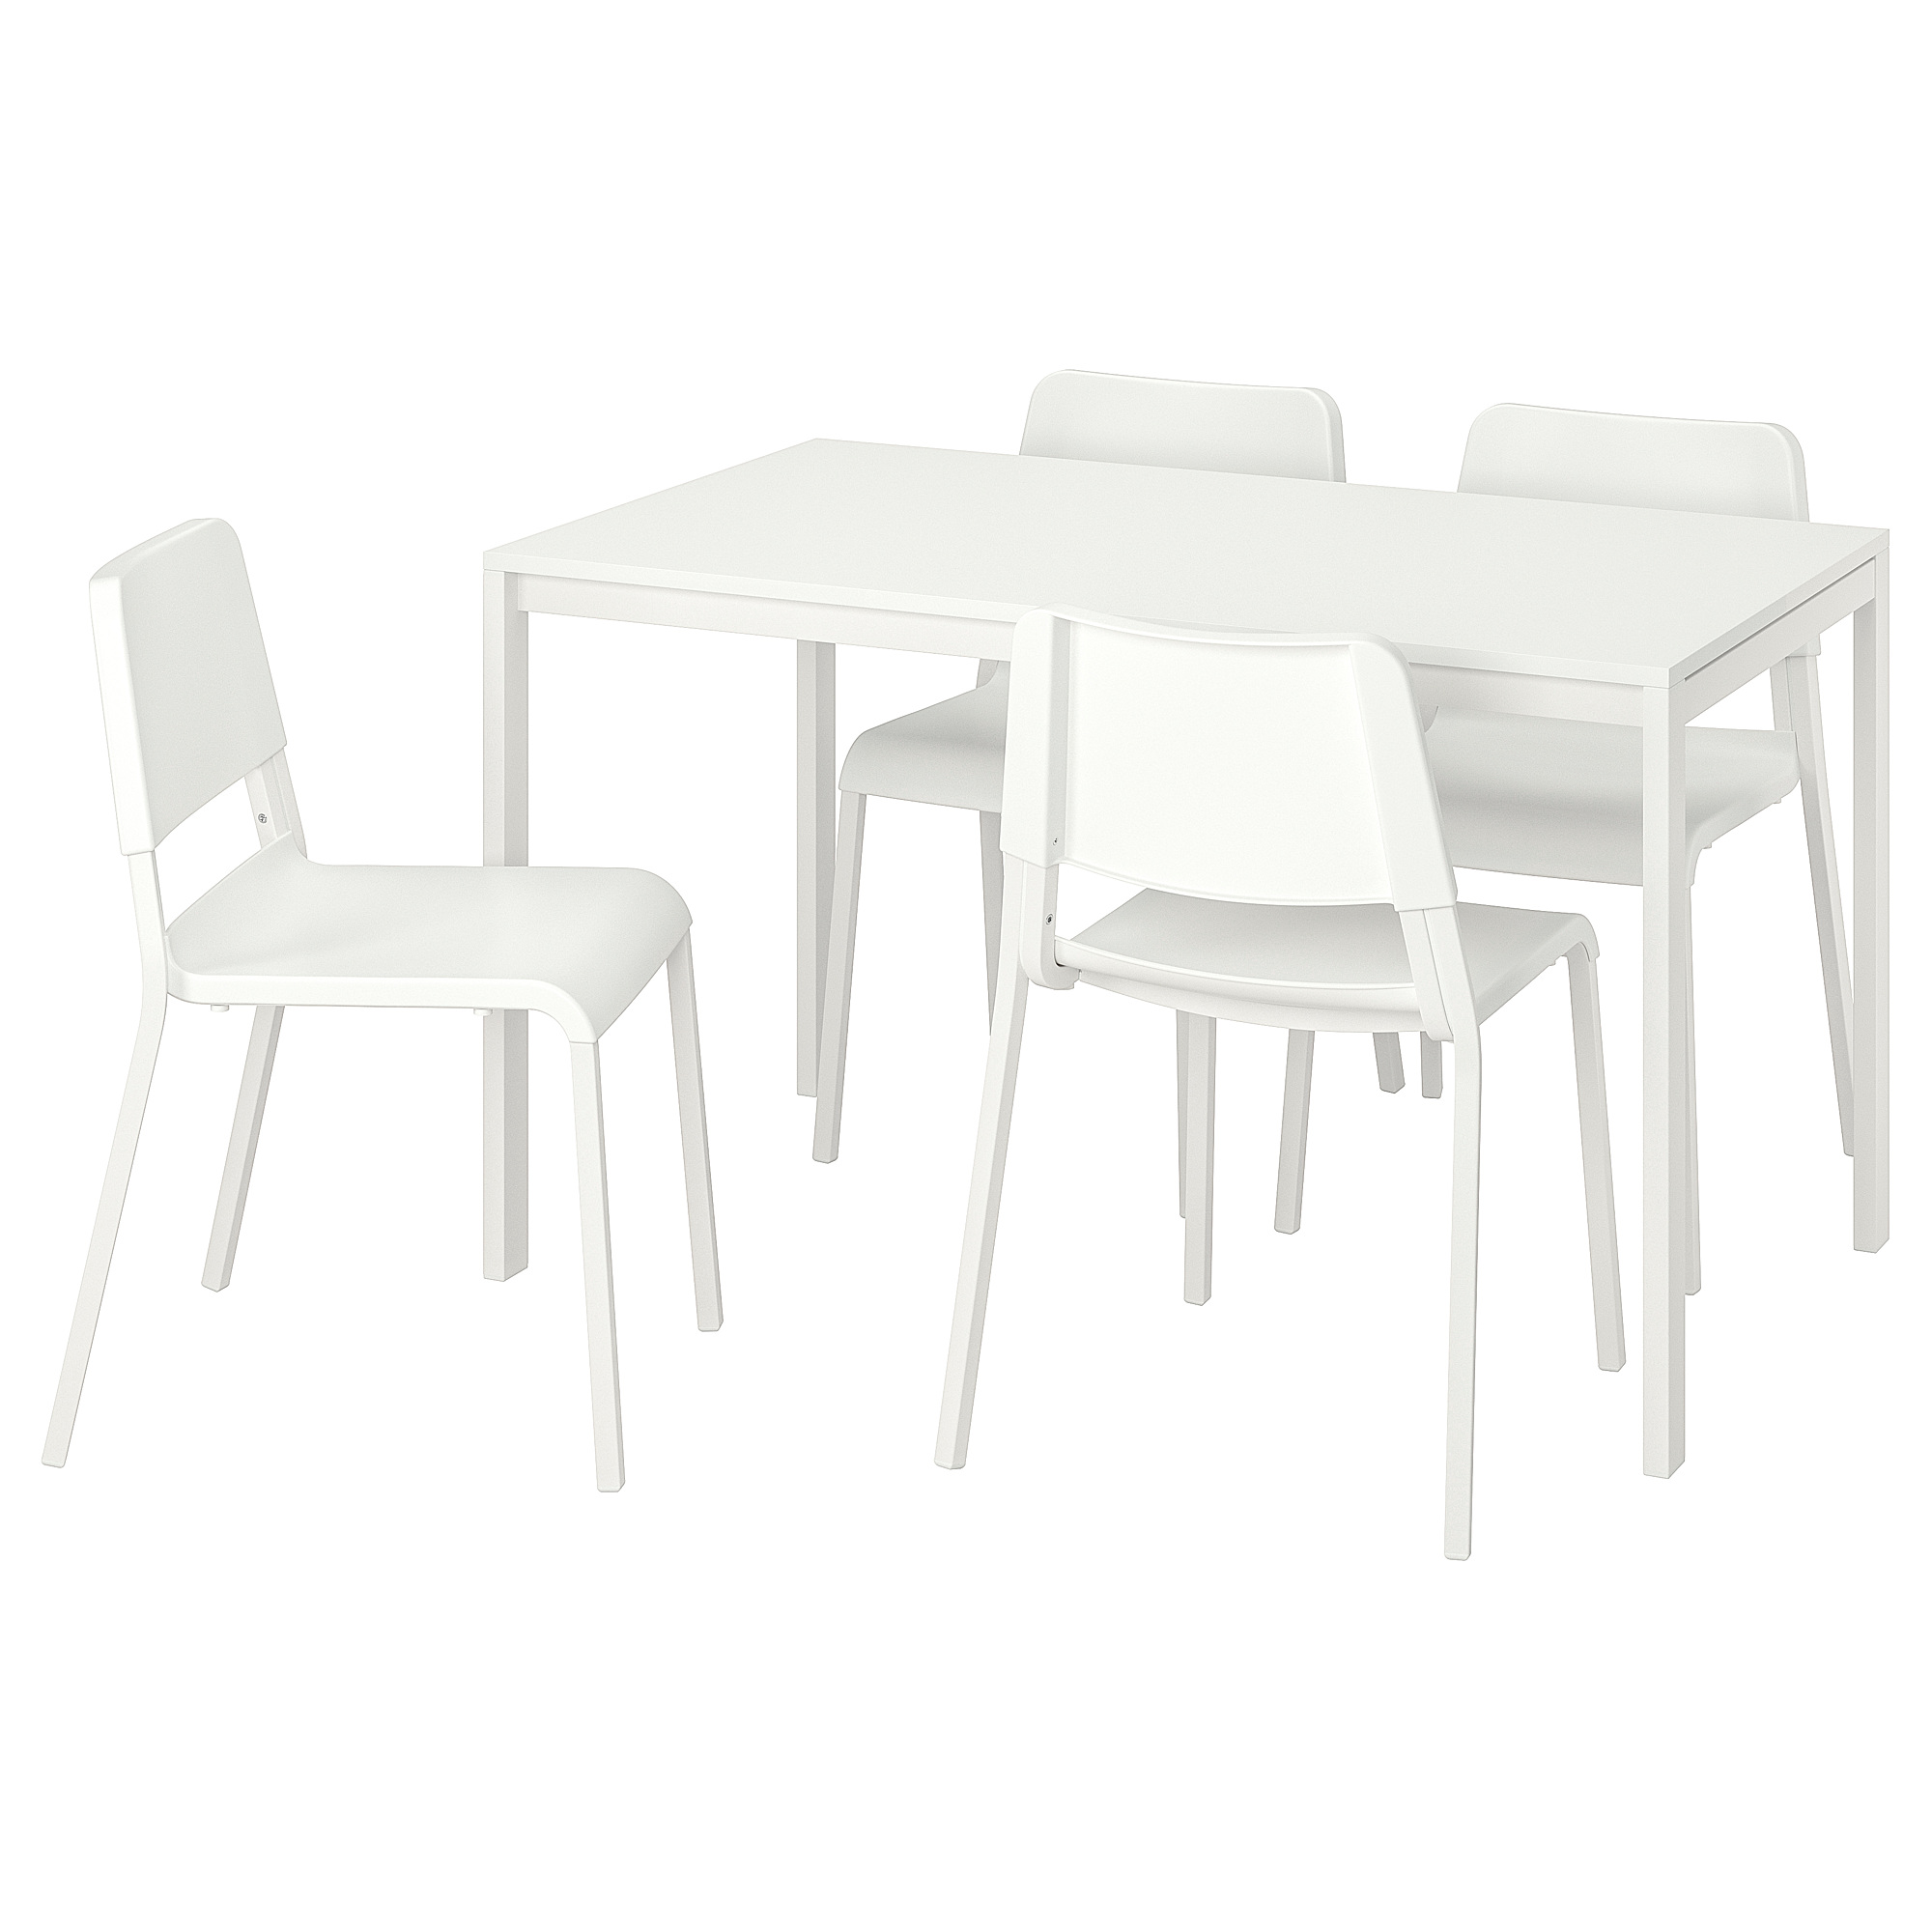 Икеа стол кухонный белый. Melltorp МЕЛЬТОРП стол белый 125x75 см. Стол икеа МЕЛЬТОРП белый. Икеа МЕЛЬТОРП 75 на 125 стол. Стол Melltorp ikea 75 на 75.